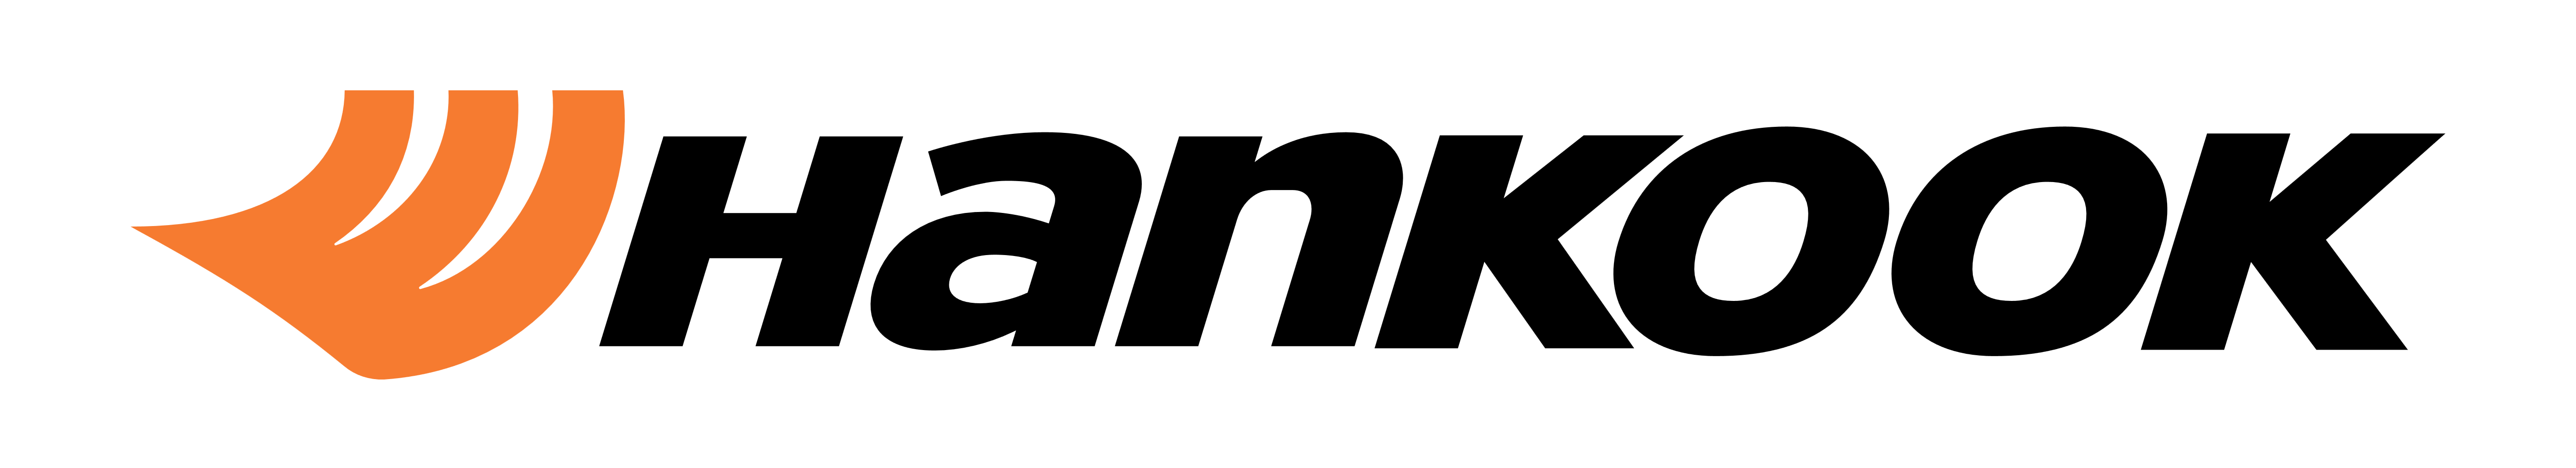 Hankook Logo - Hankook Logo, HD Png, Information | Carlogos.org